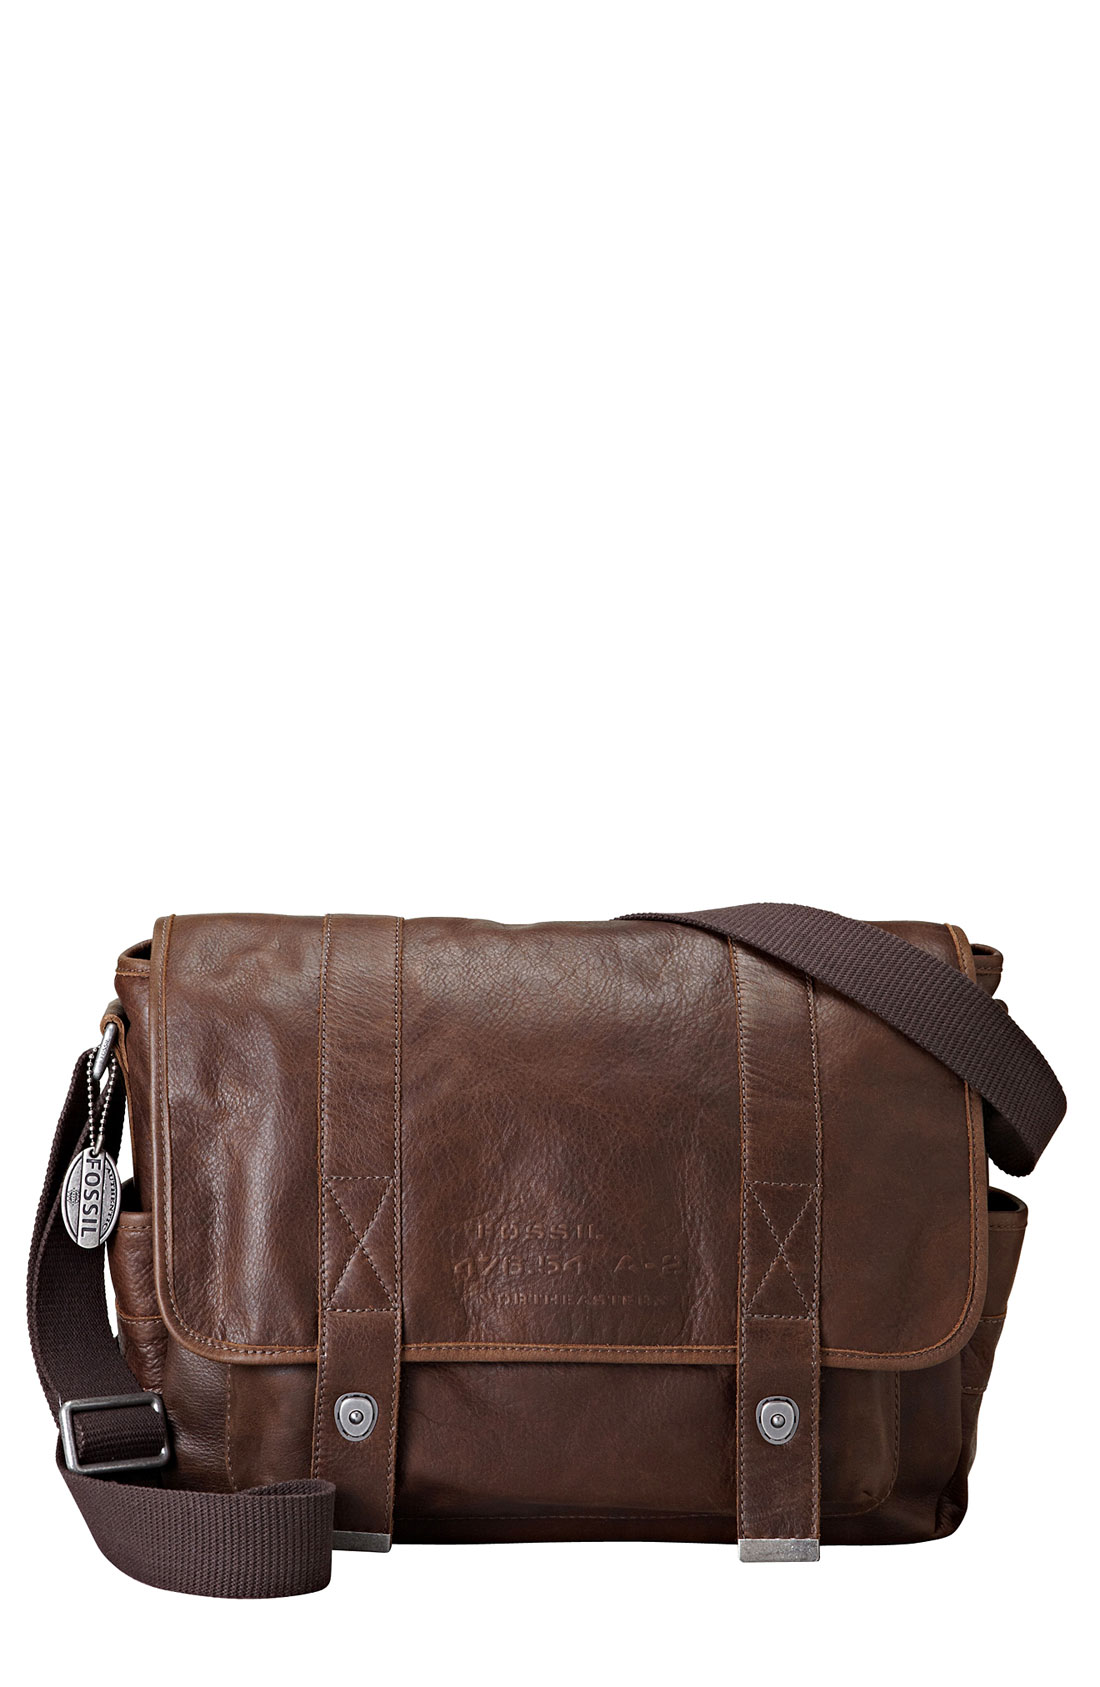 fossil-brown-combat-messenger-bag-product-2-2005281-189994078.jpeg